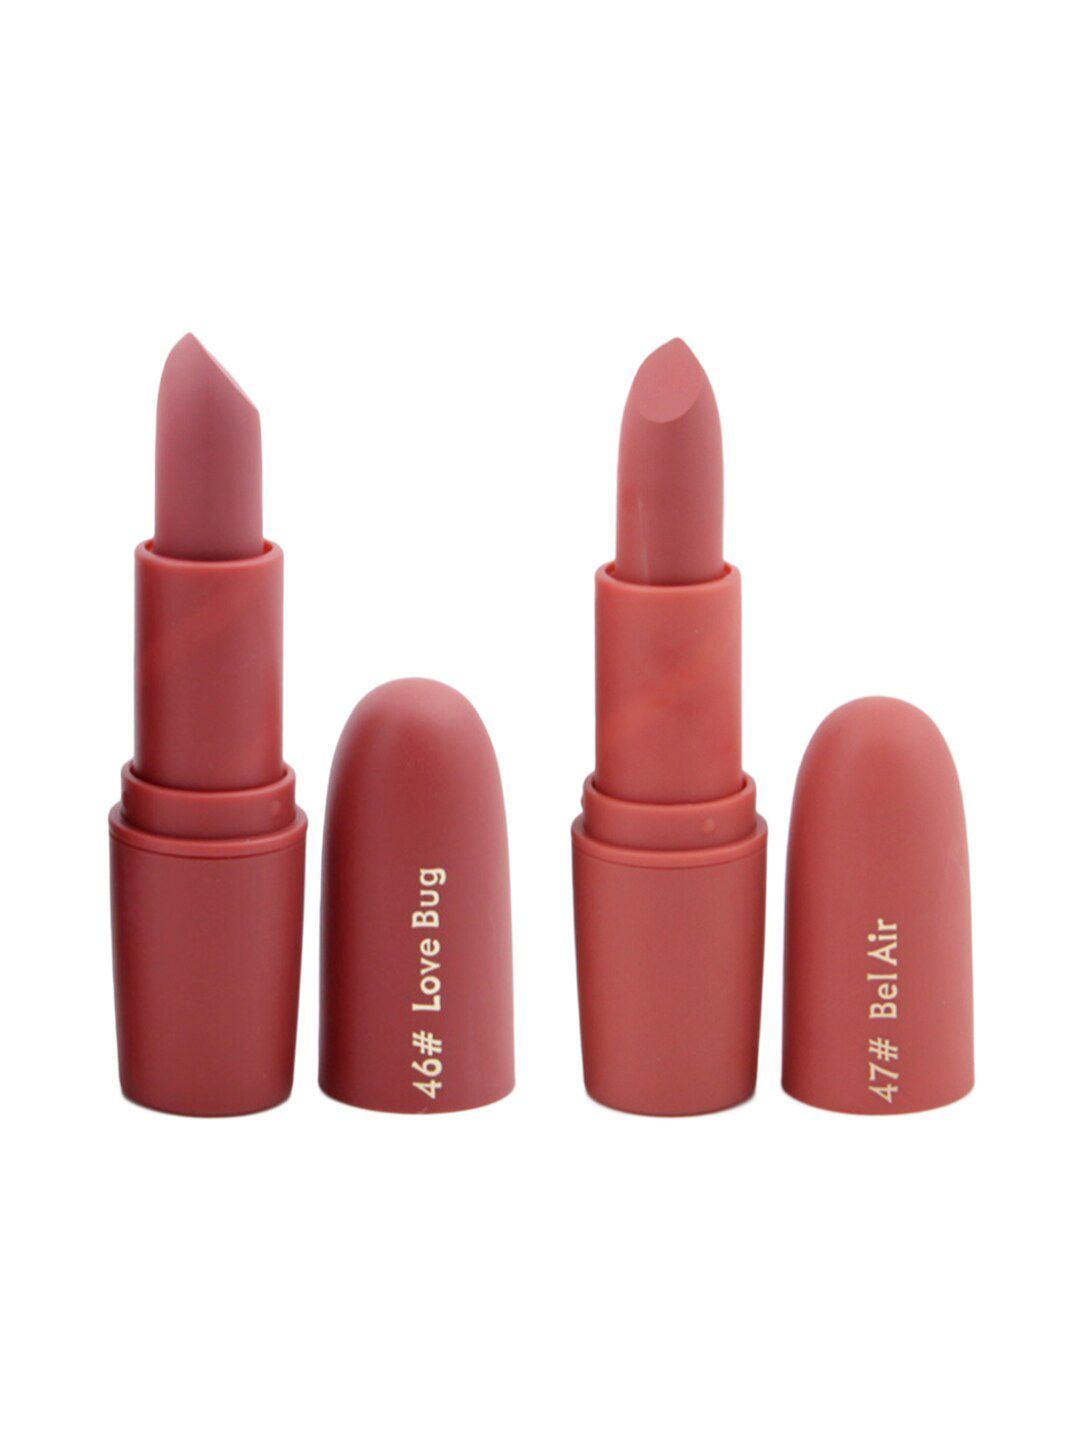 MISS ROSE Professional Make-Up Set of 2 Matte Creamy Lipsticks - Love Bug 46 & Bel Air 47 Price in India